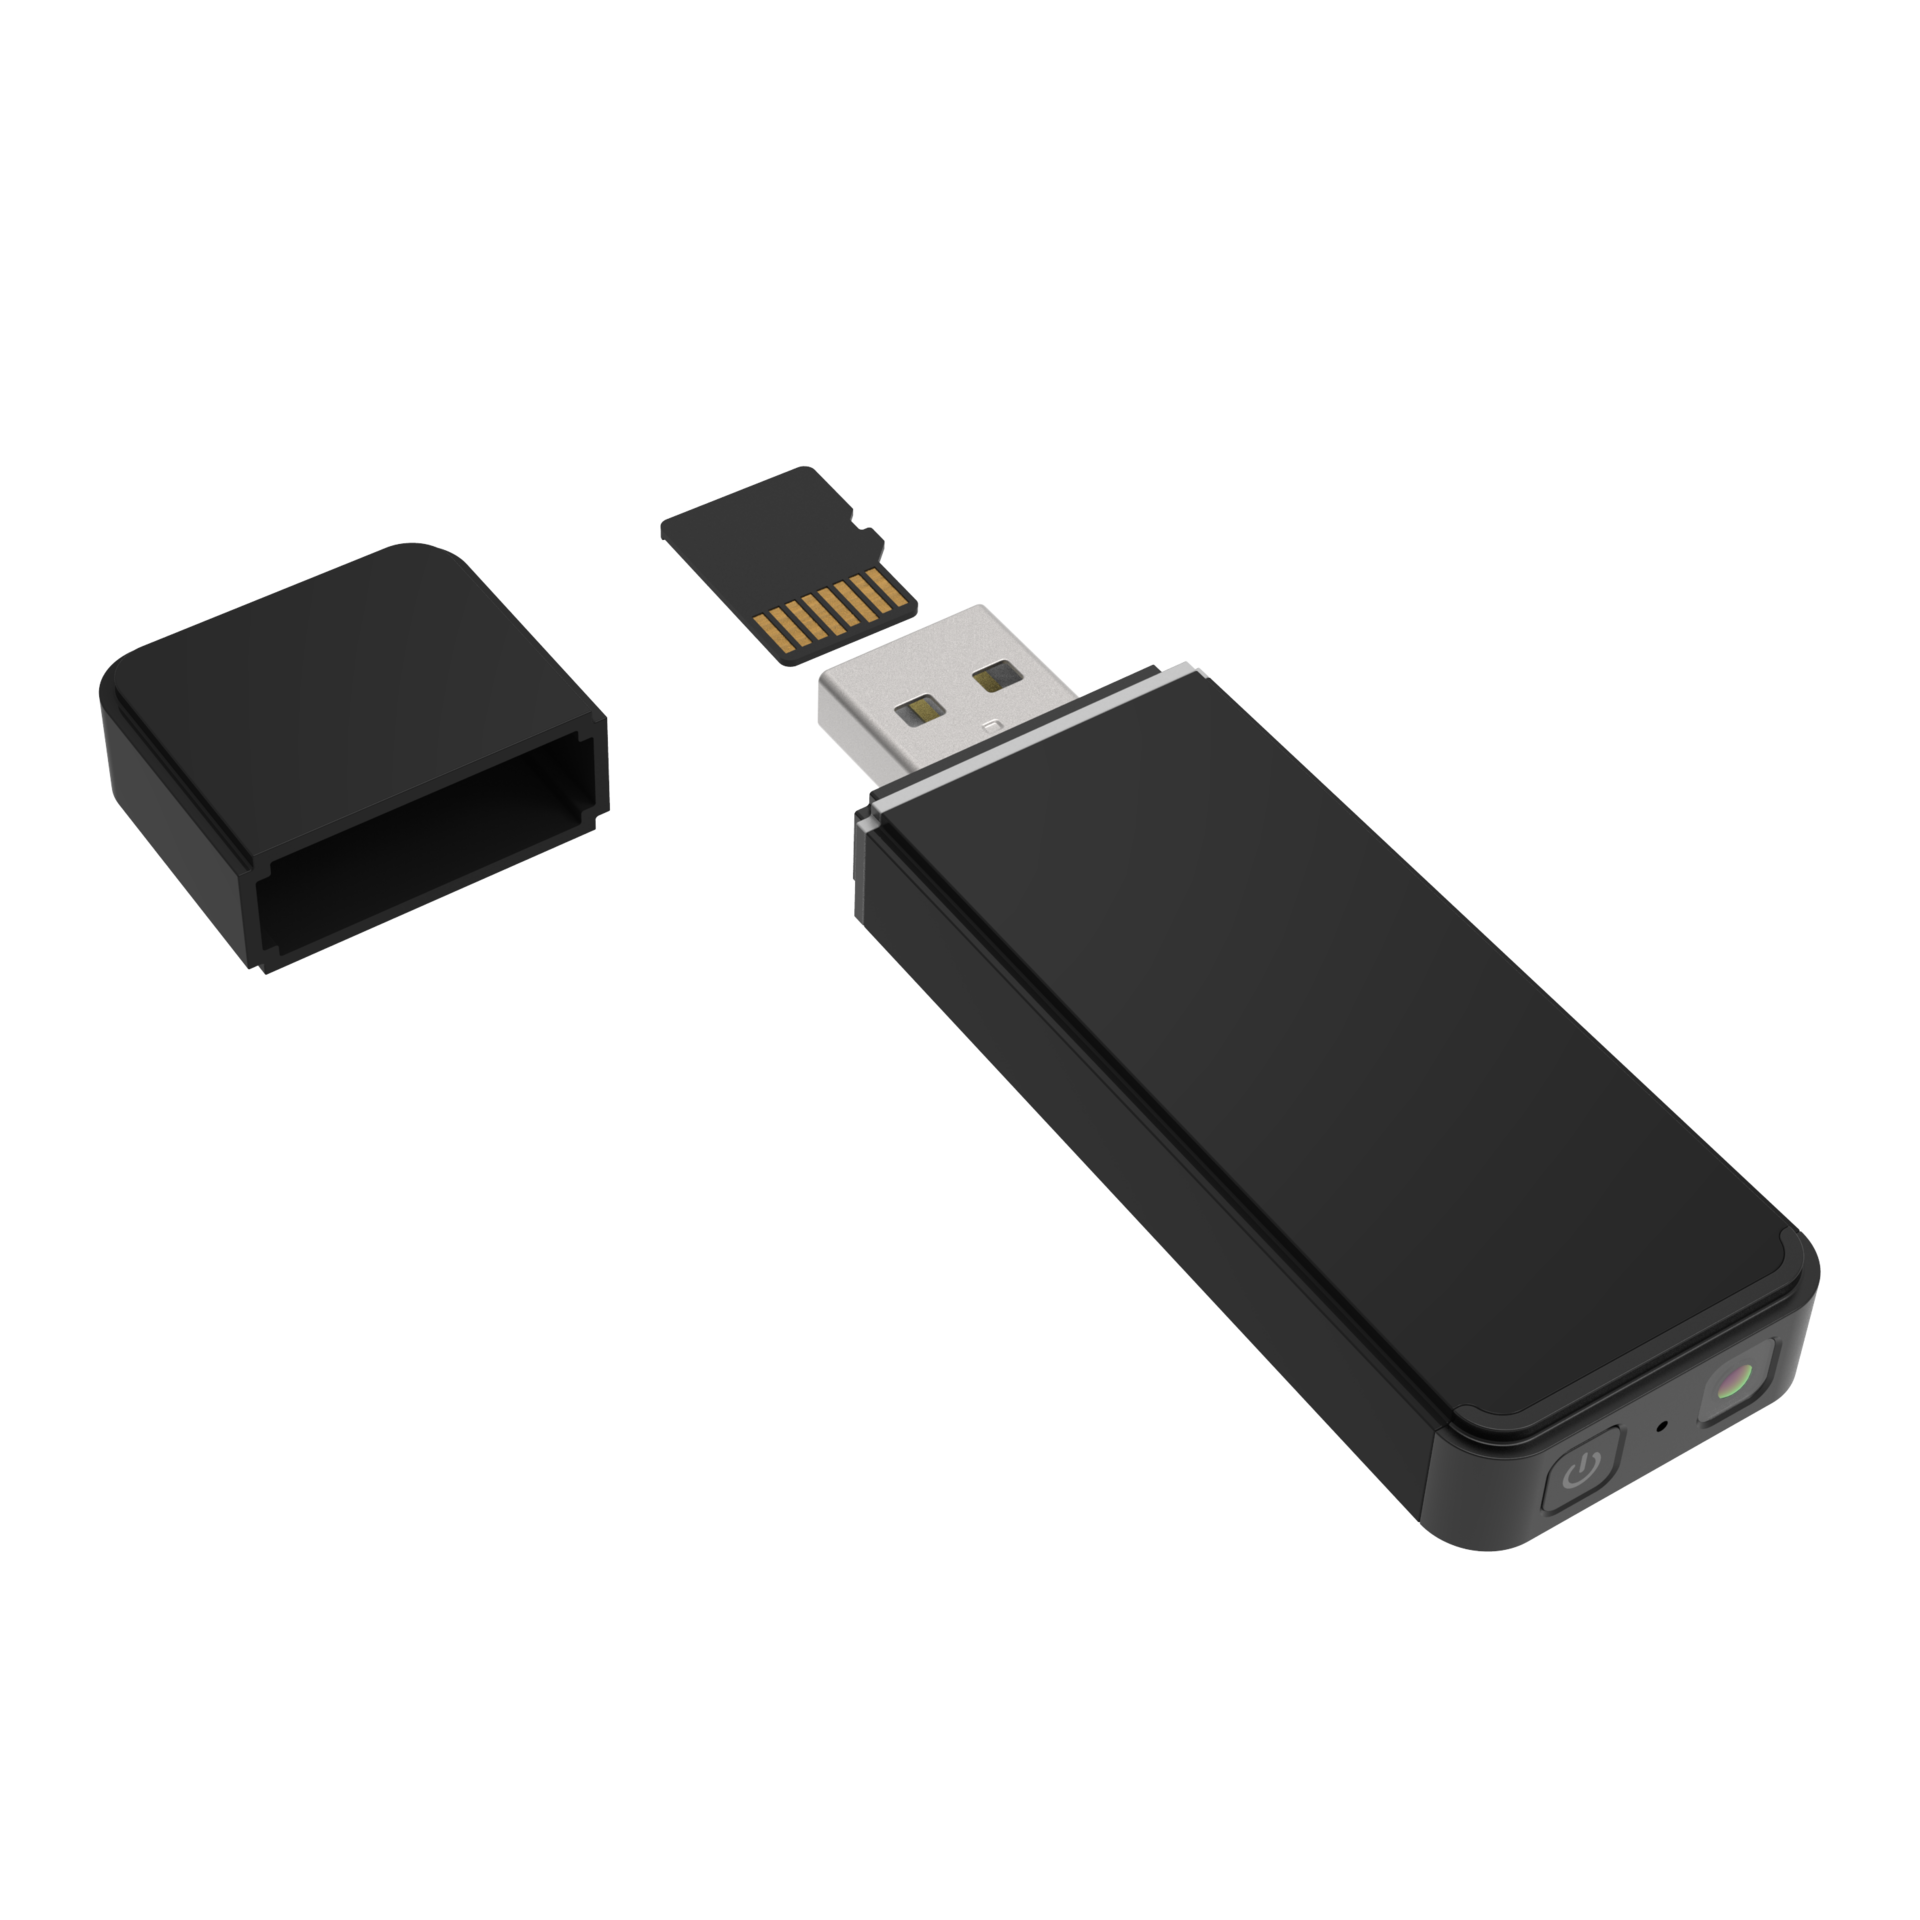 product-Hnsat-OEM Portable USB Disk Drive Spy Camera Pen Invisible Smallest Hidden Camera Motion Det